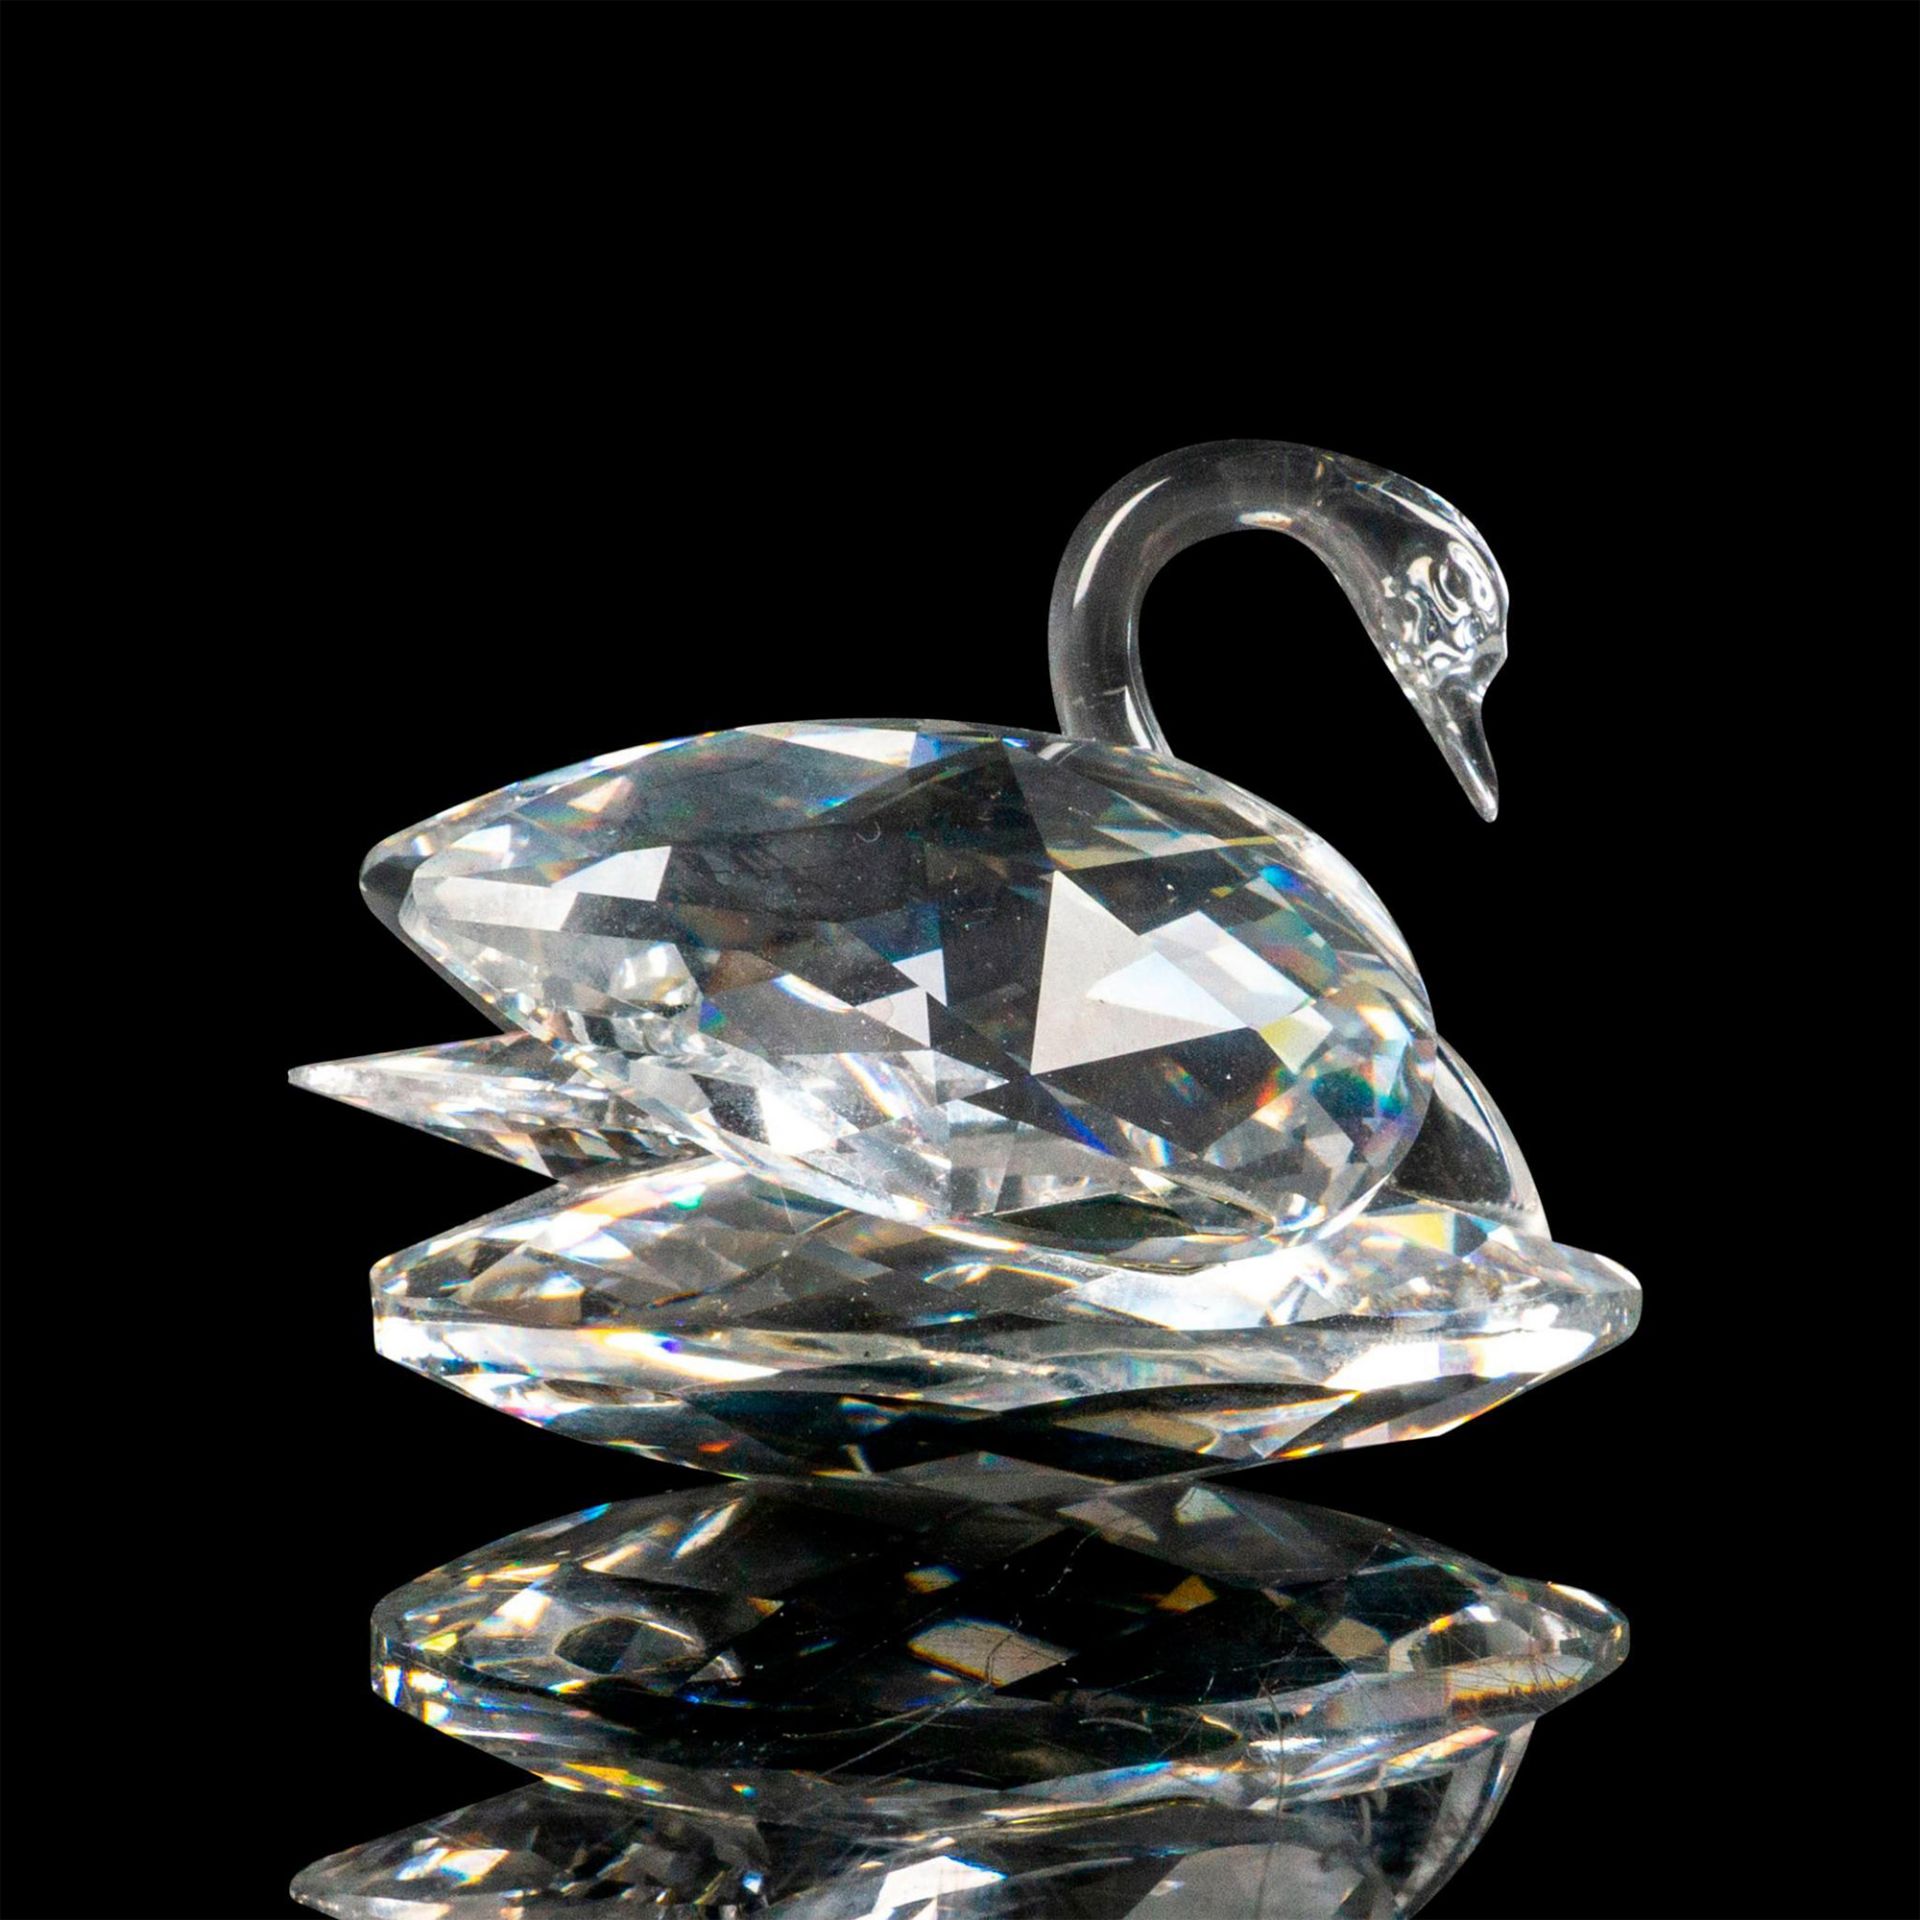 Swarovski Silver Crystal Figurine, Large Swan